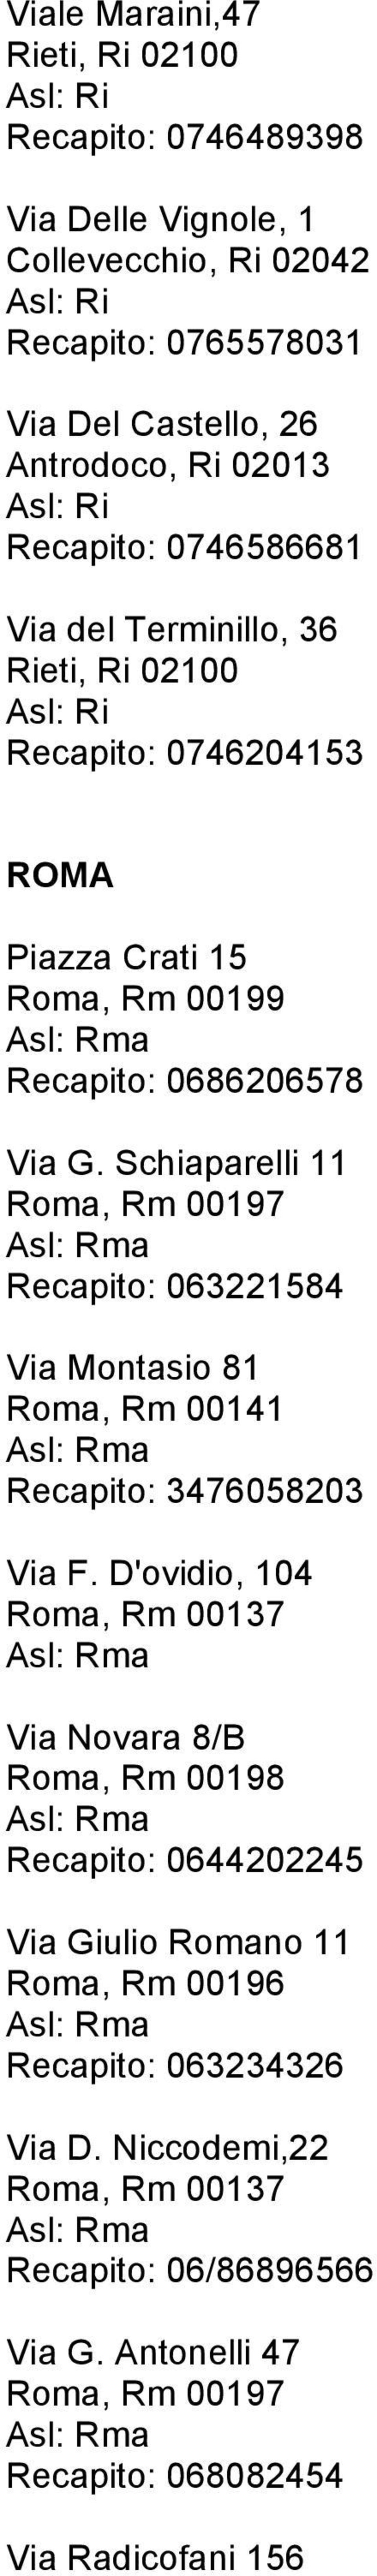 Schiaparelli 11 Roma, Rm 00197 Recapito: 063221584 Via Montasio 81 Roma, Rm 00141 Recapito: 3476058203 Via F.